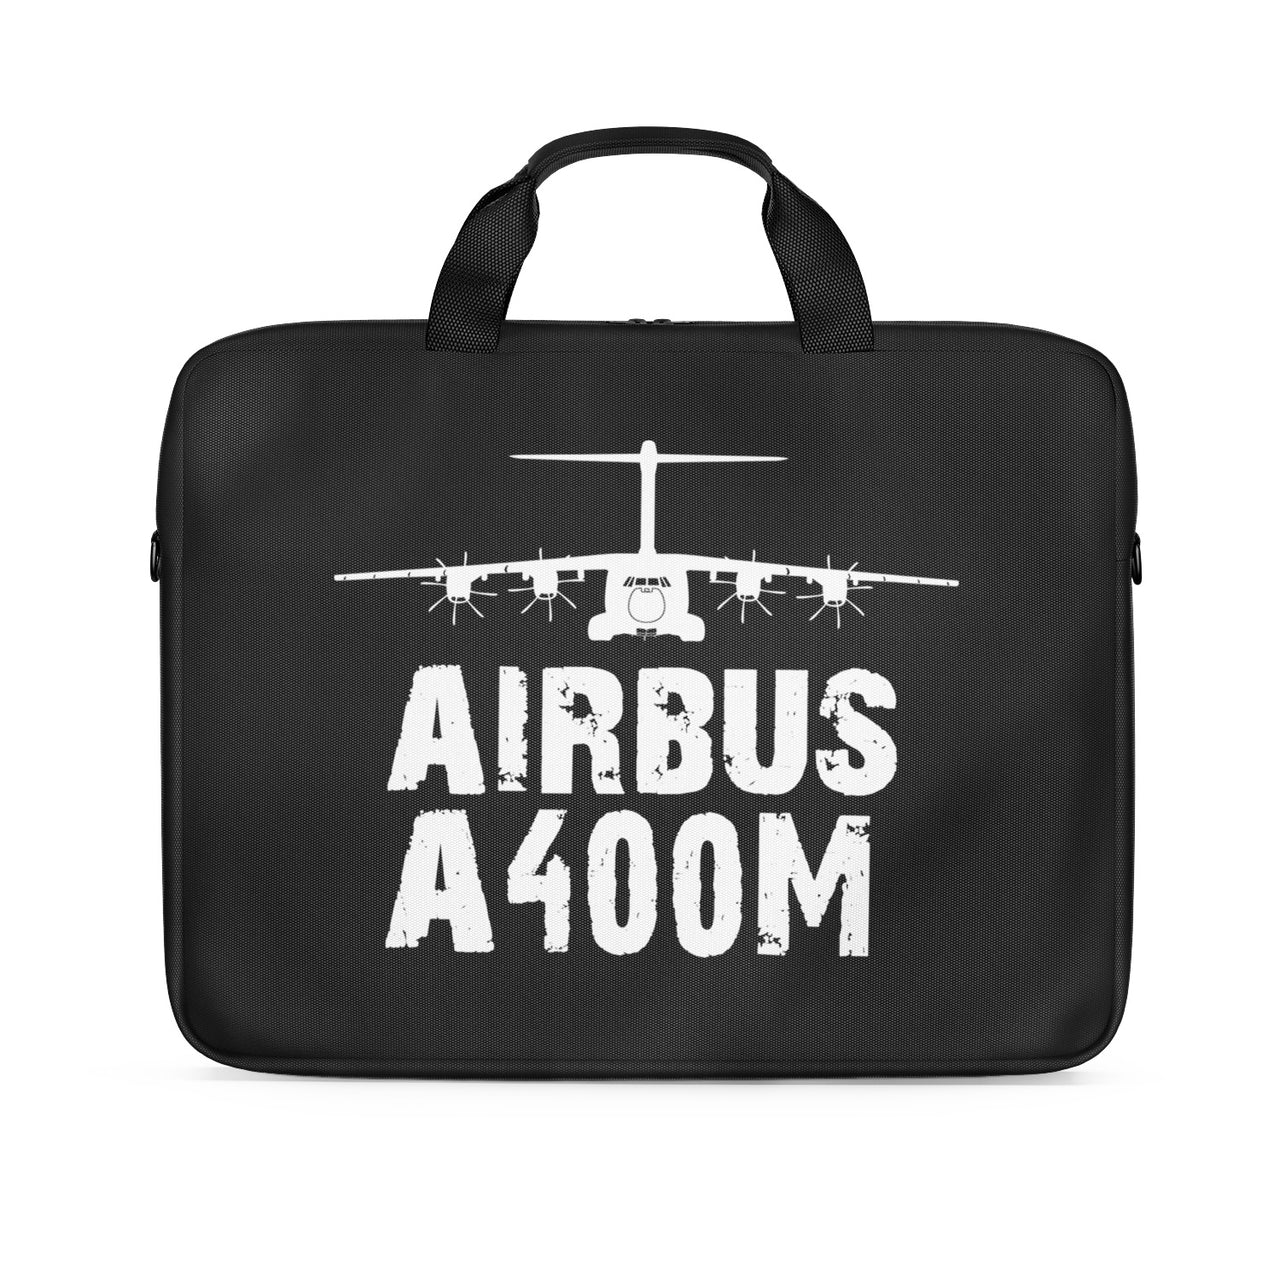 Airbus A400M & Plane Designed Laptop & Tablet Bags